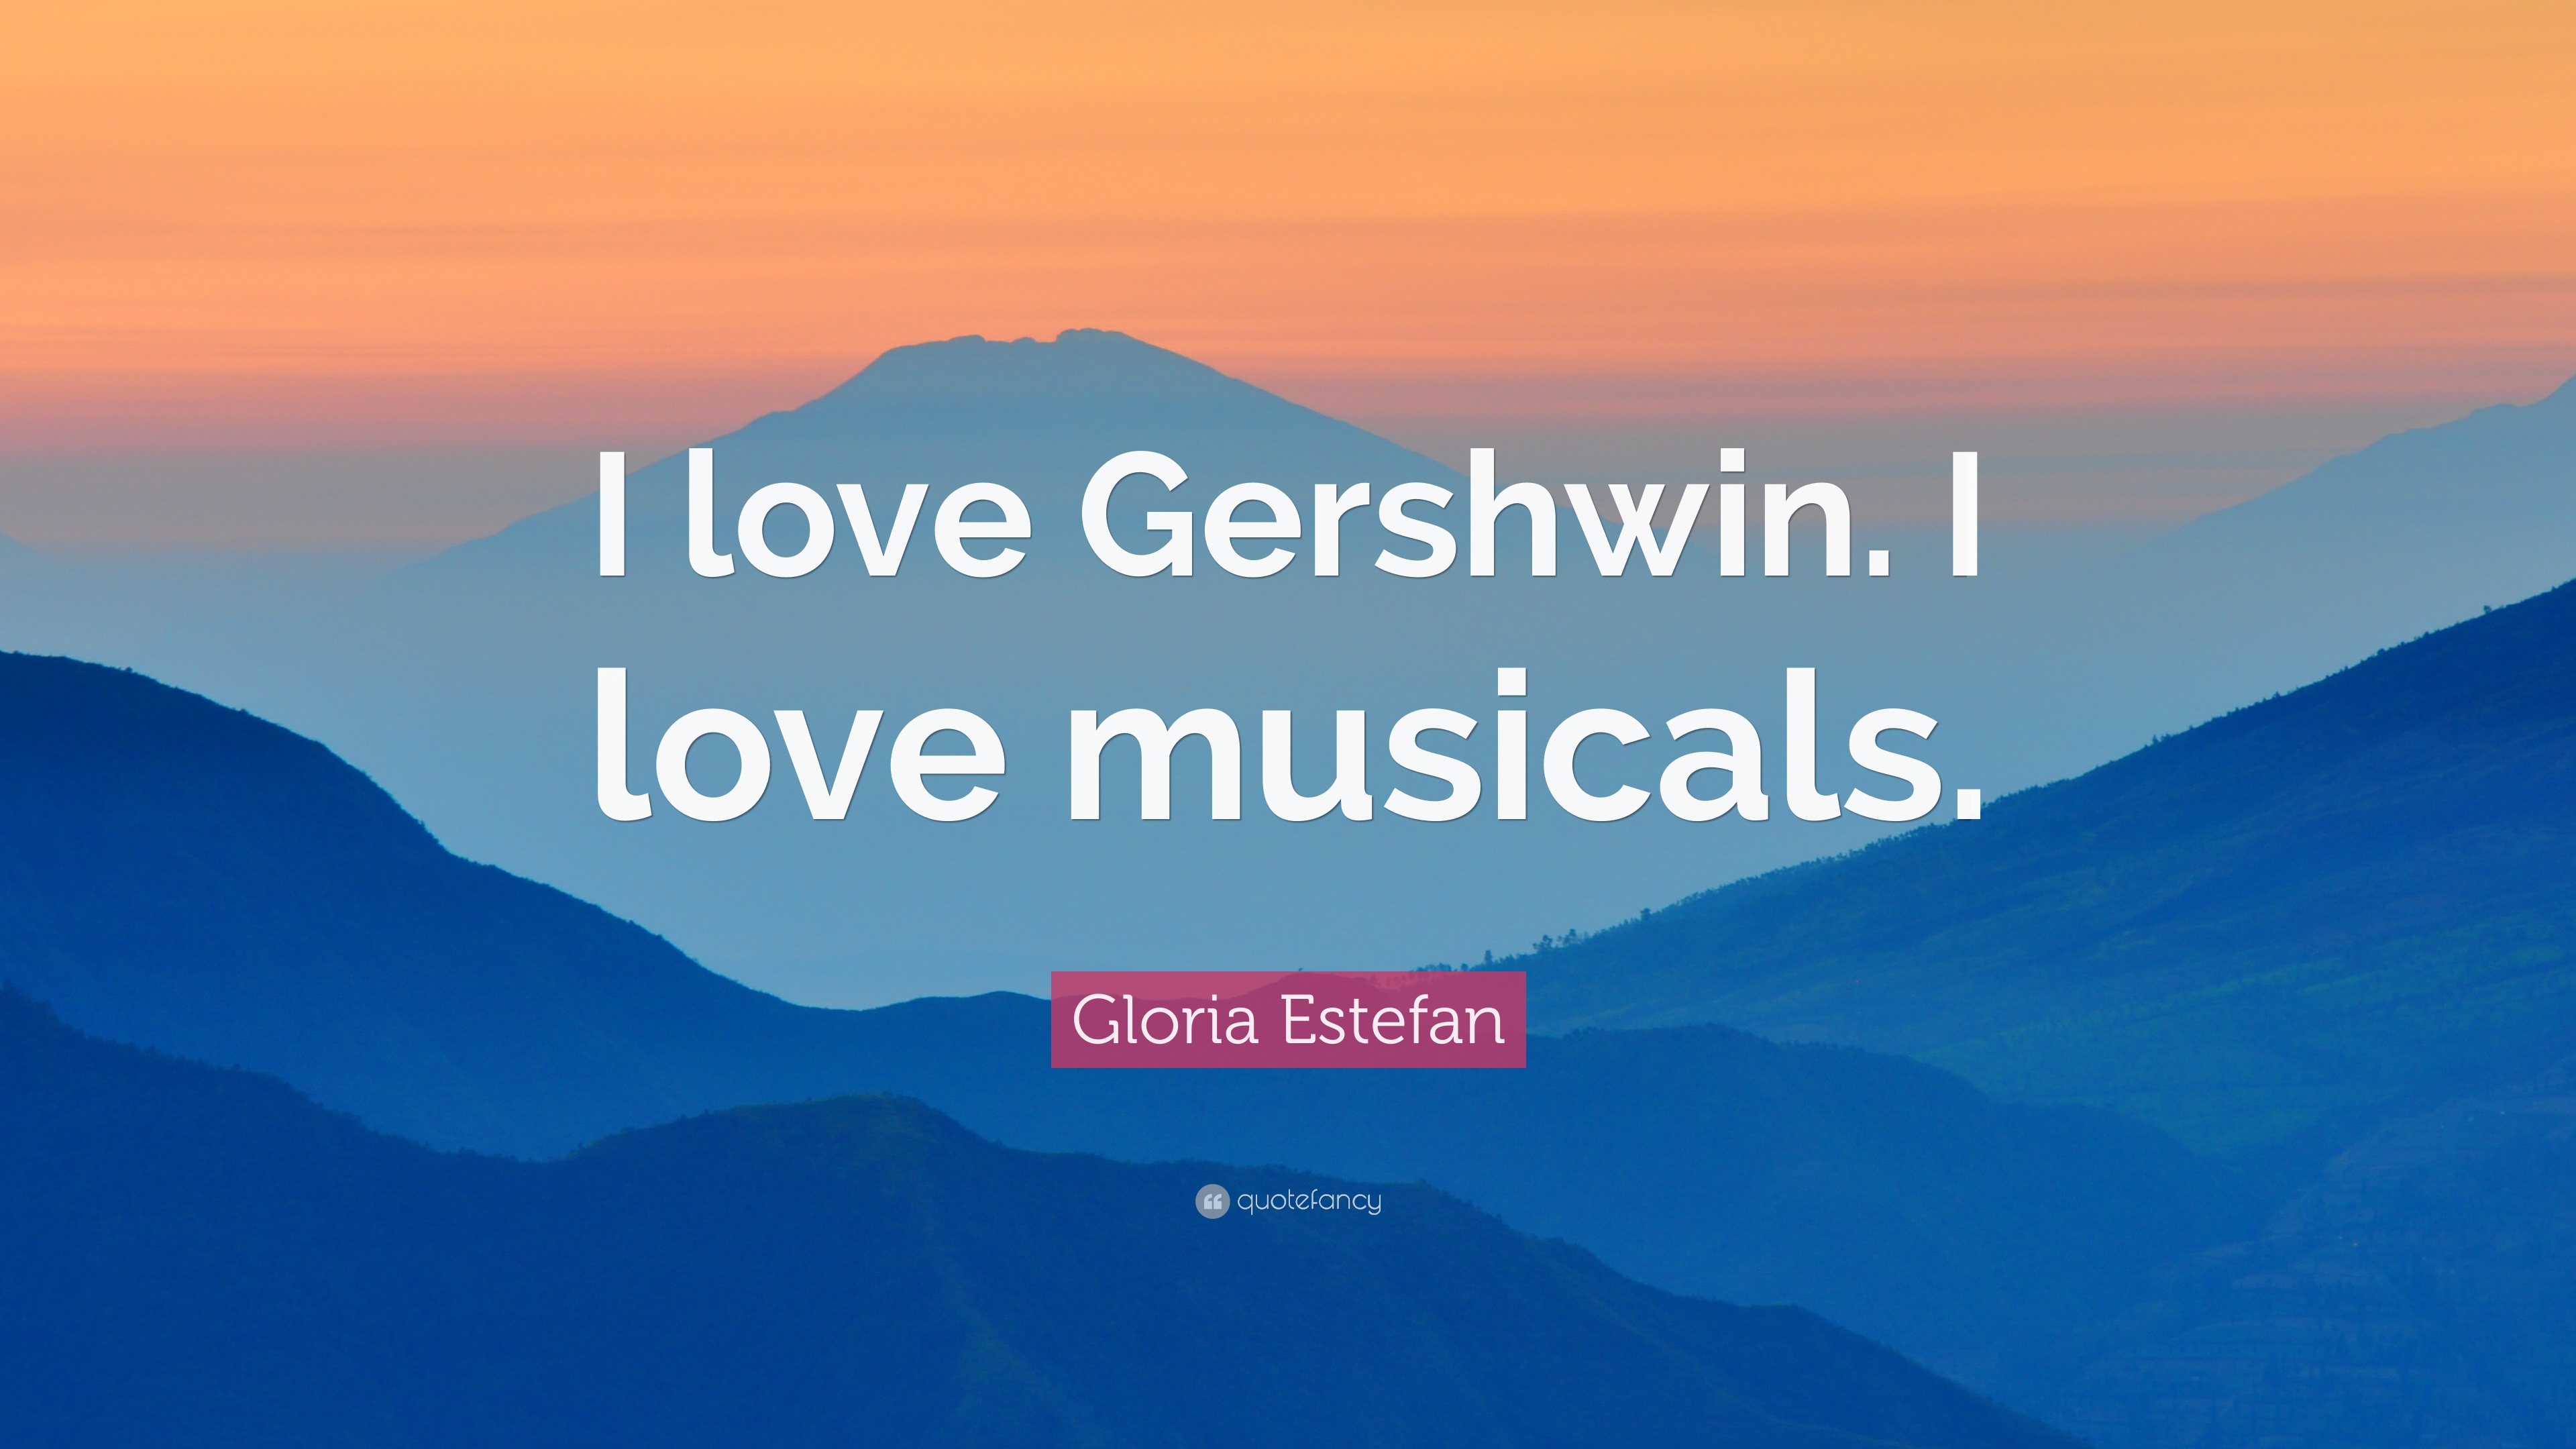 Gloria Estefan Quote: “I love Gershwin. I love musicals.” 7